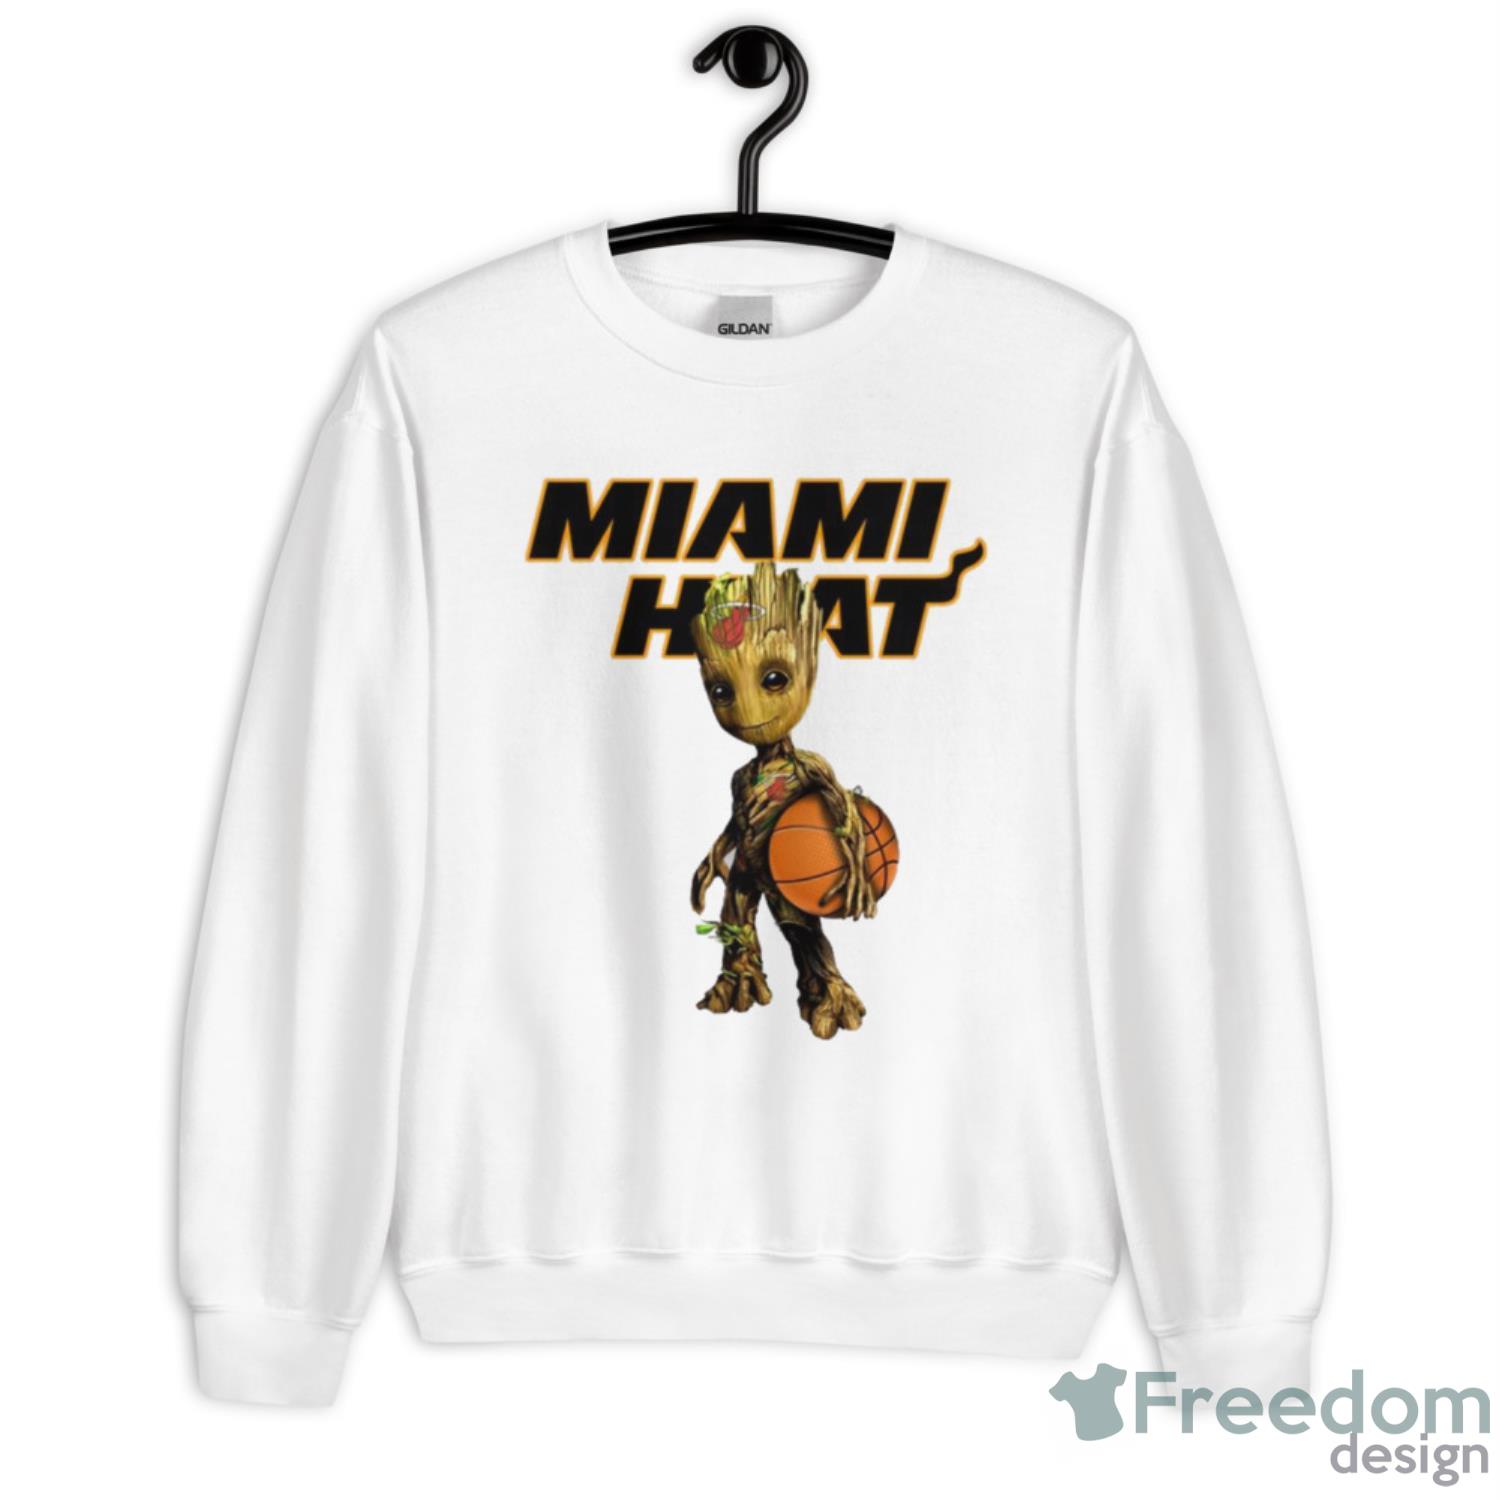 Miami Heat Women's NBA Long Sleeve Baby Jersey Crew Neck Tee 